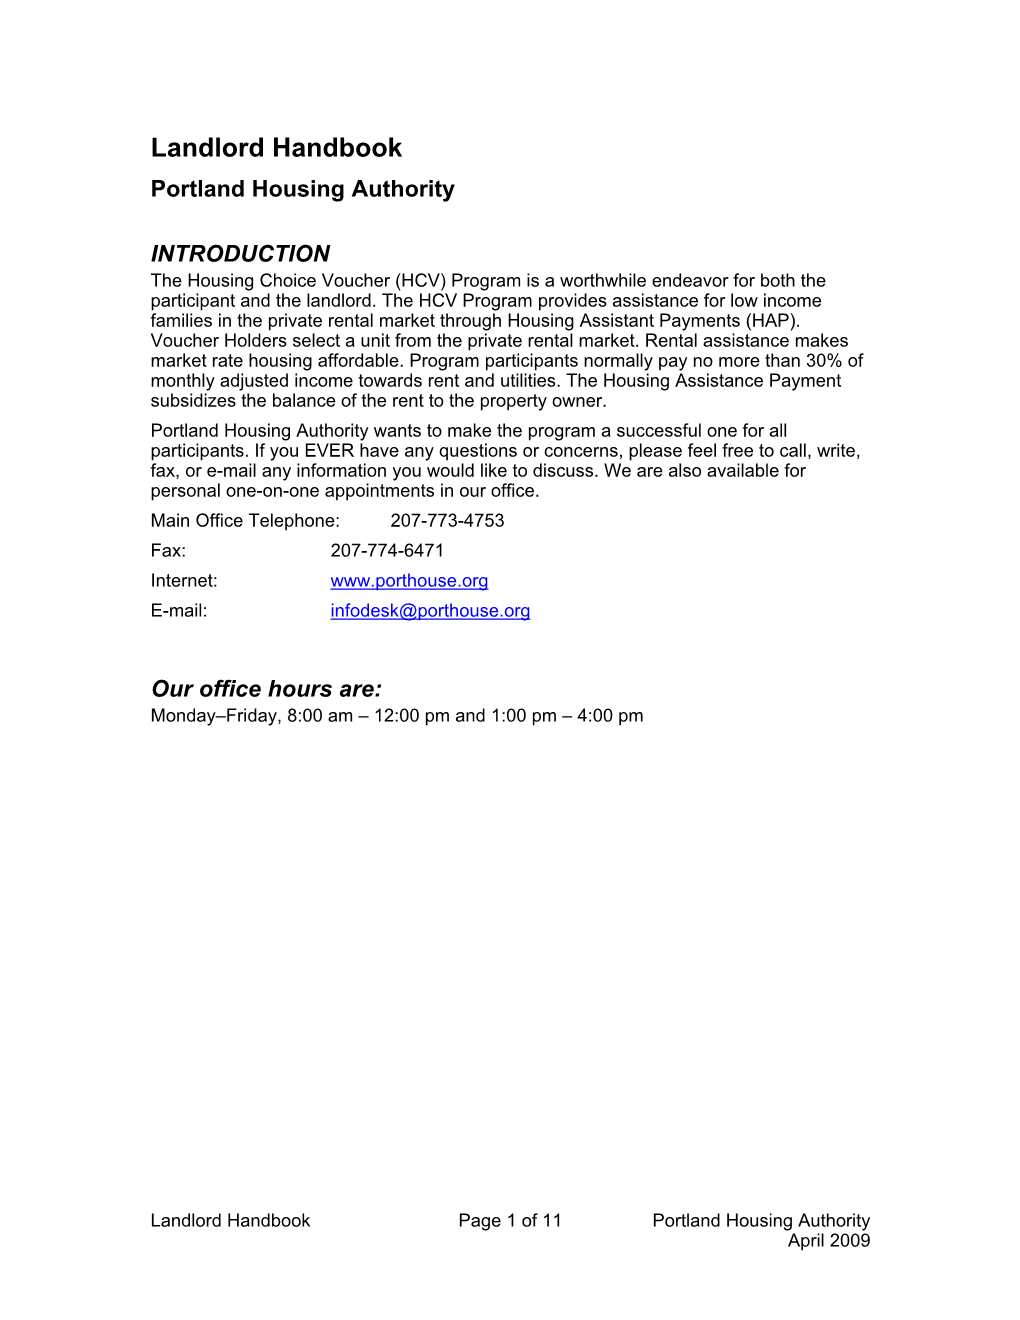 Landlord Handbook Portland Housing Authority